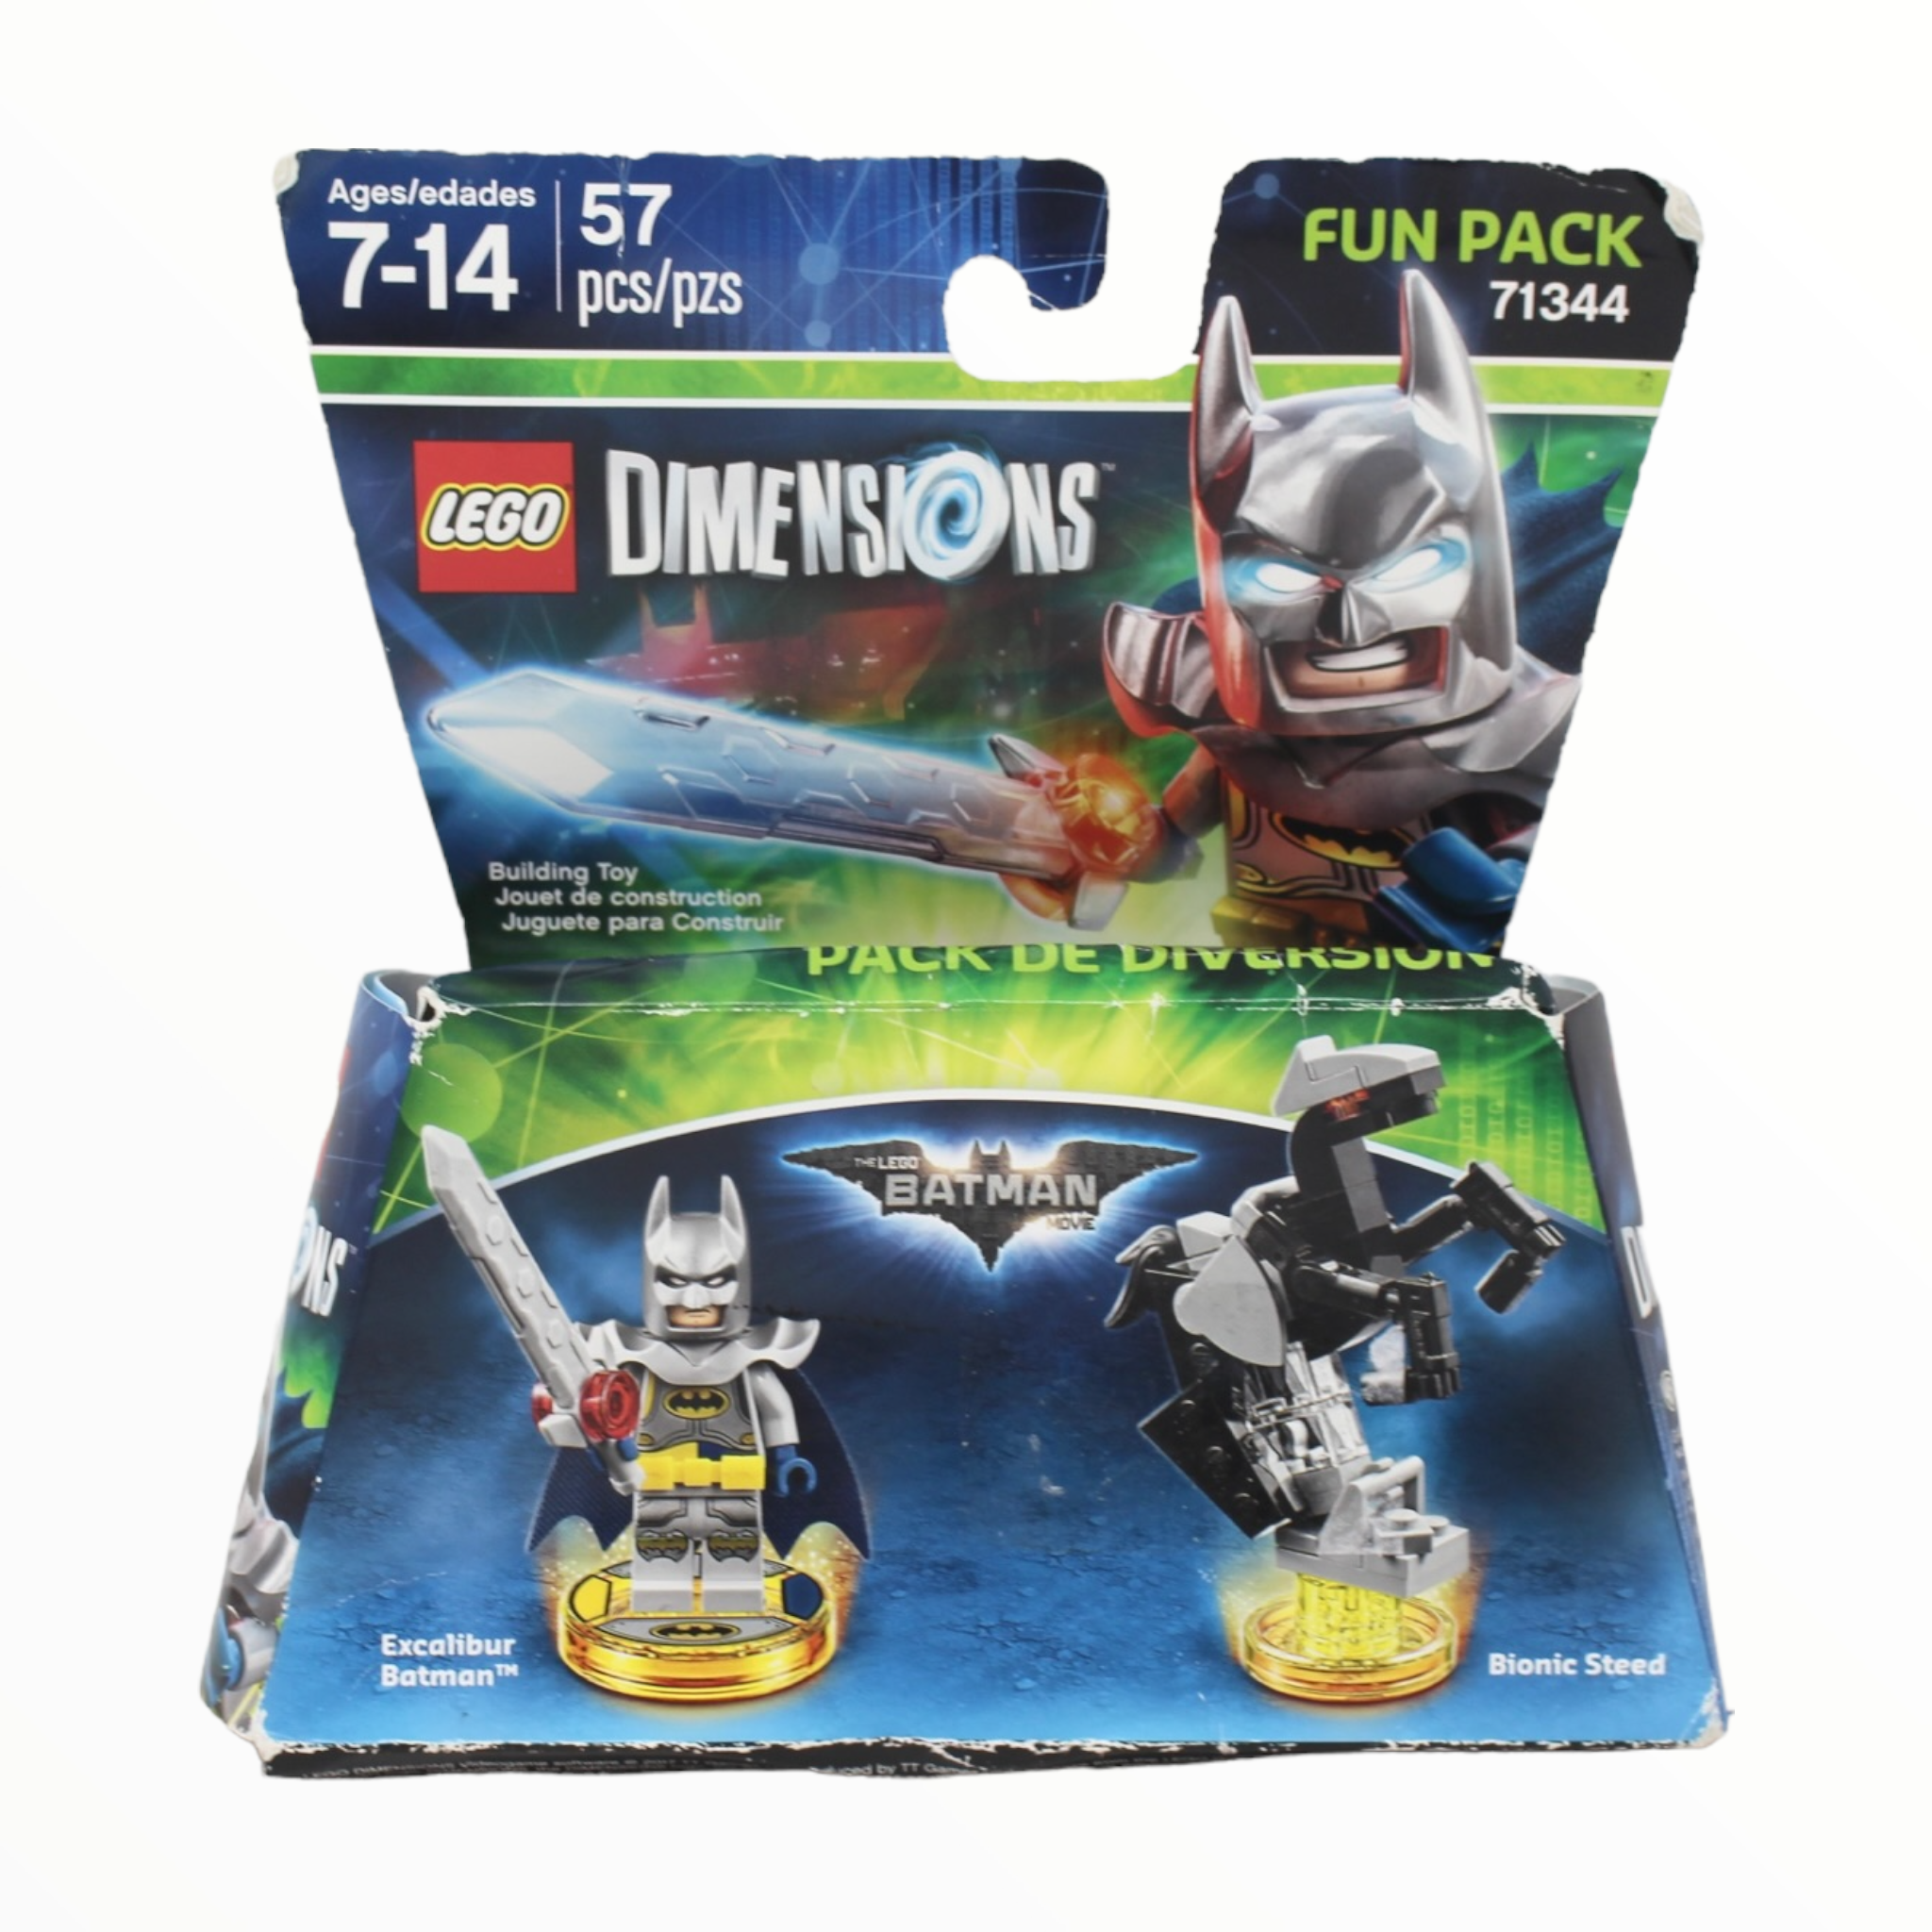 Retired Set 71344 Dimensions Fun Pack - The LEGO Batman Movie Excalibur Batman and Bionic Steed